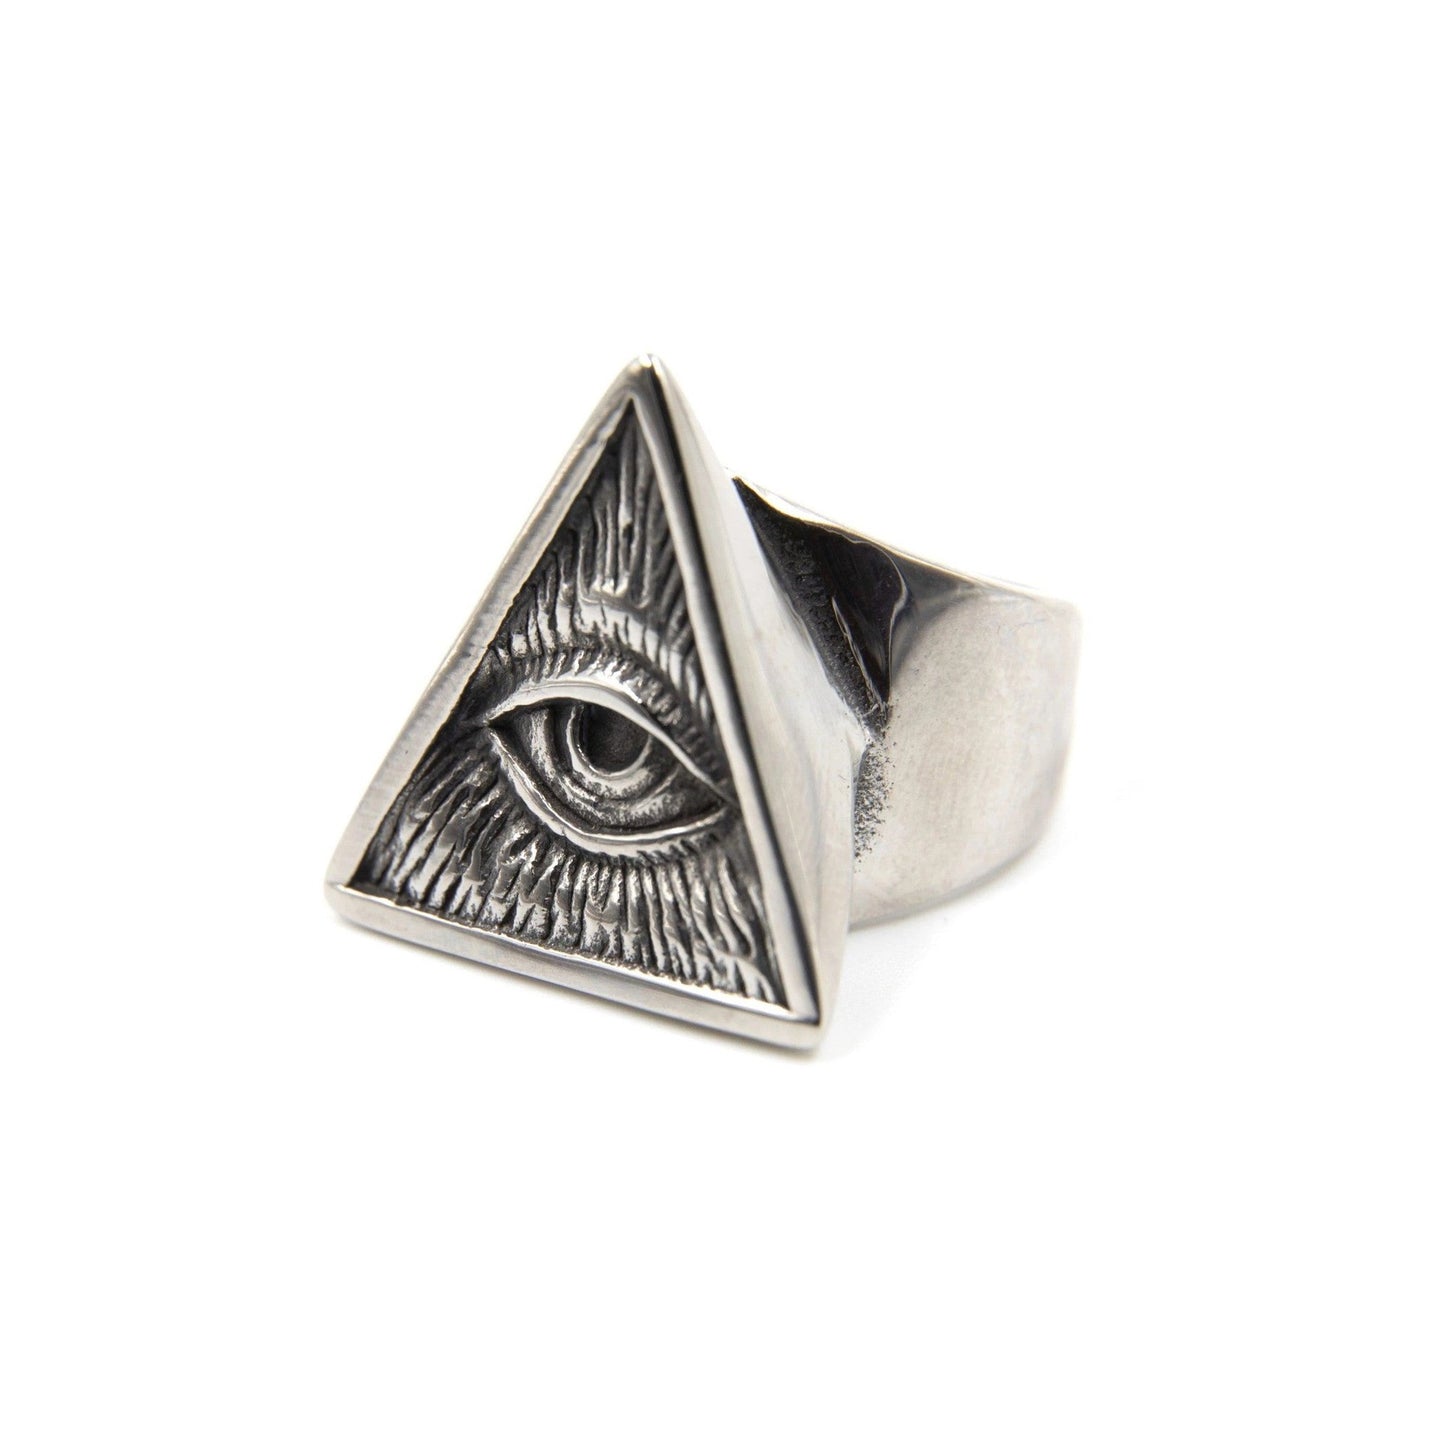 Illuminati Statement Ring in Heritage Silver